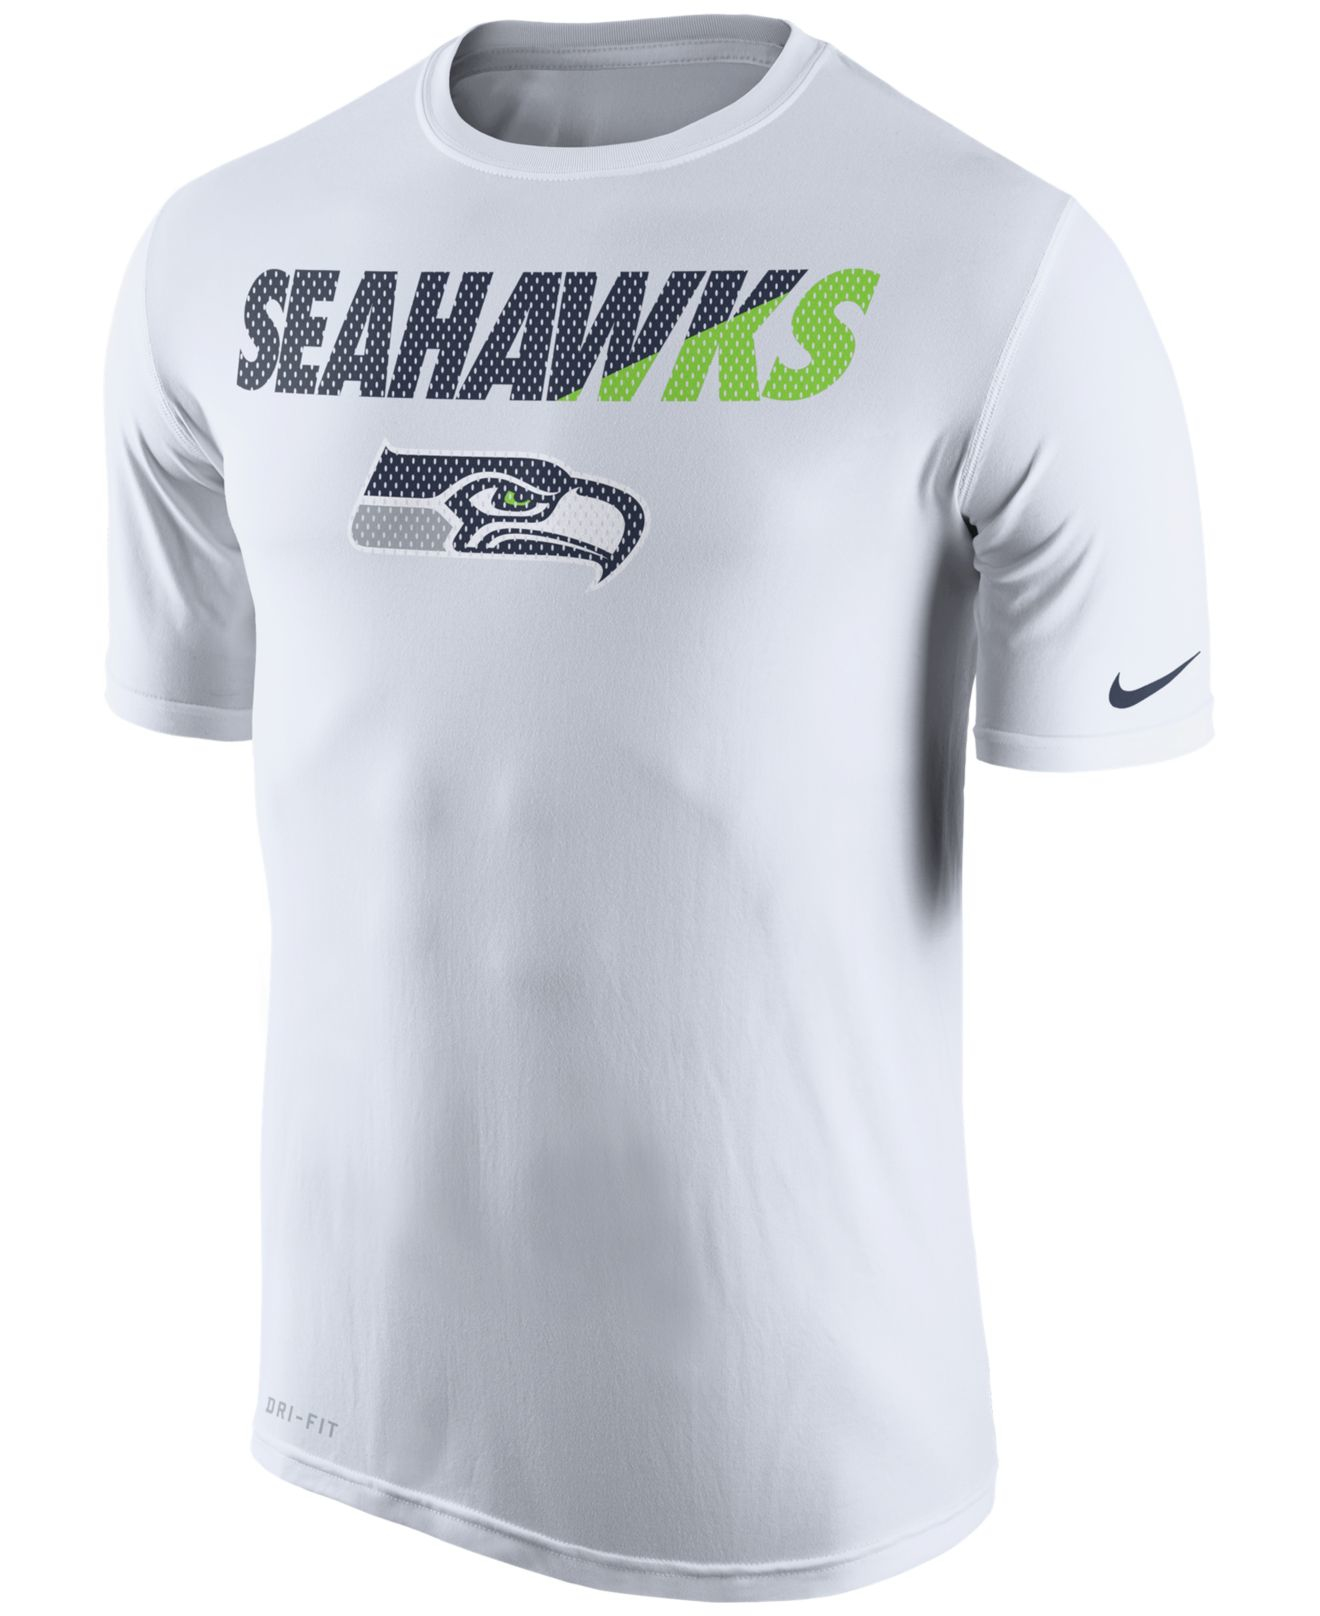 seahawks t shirt mens